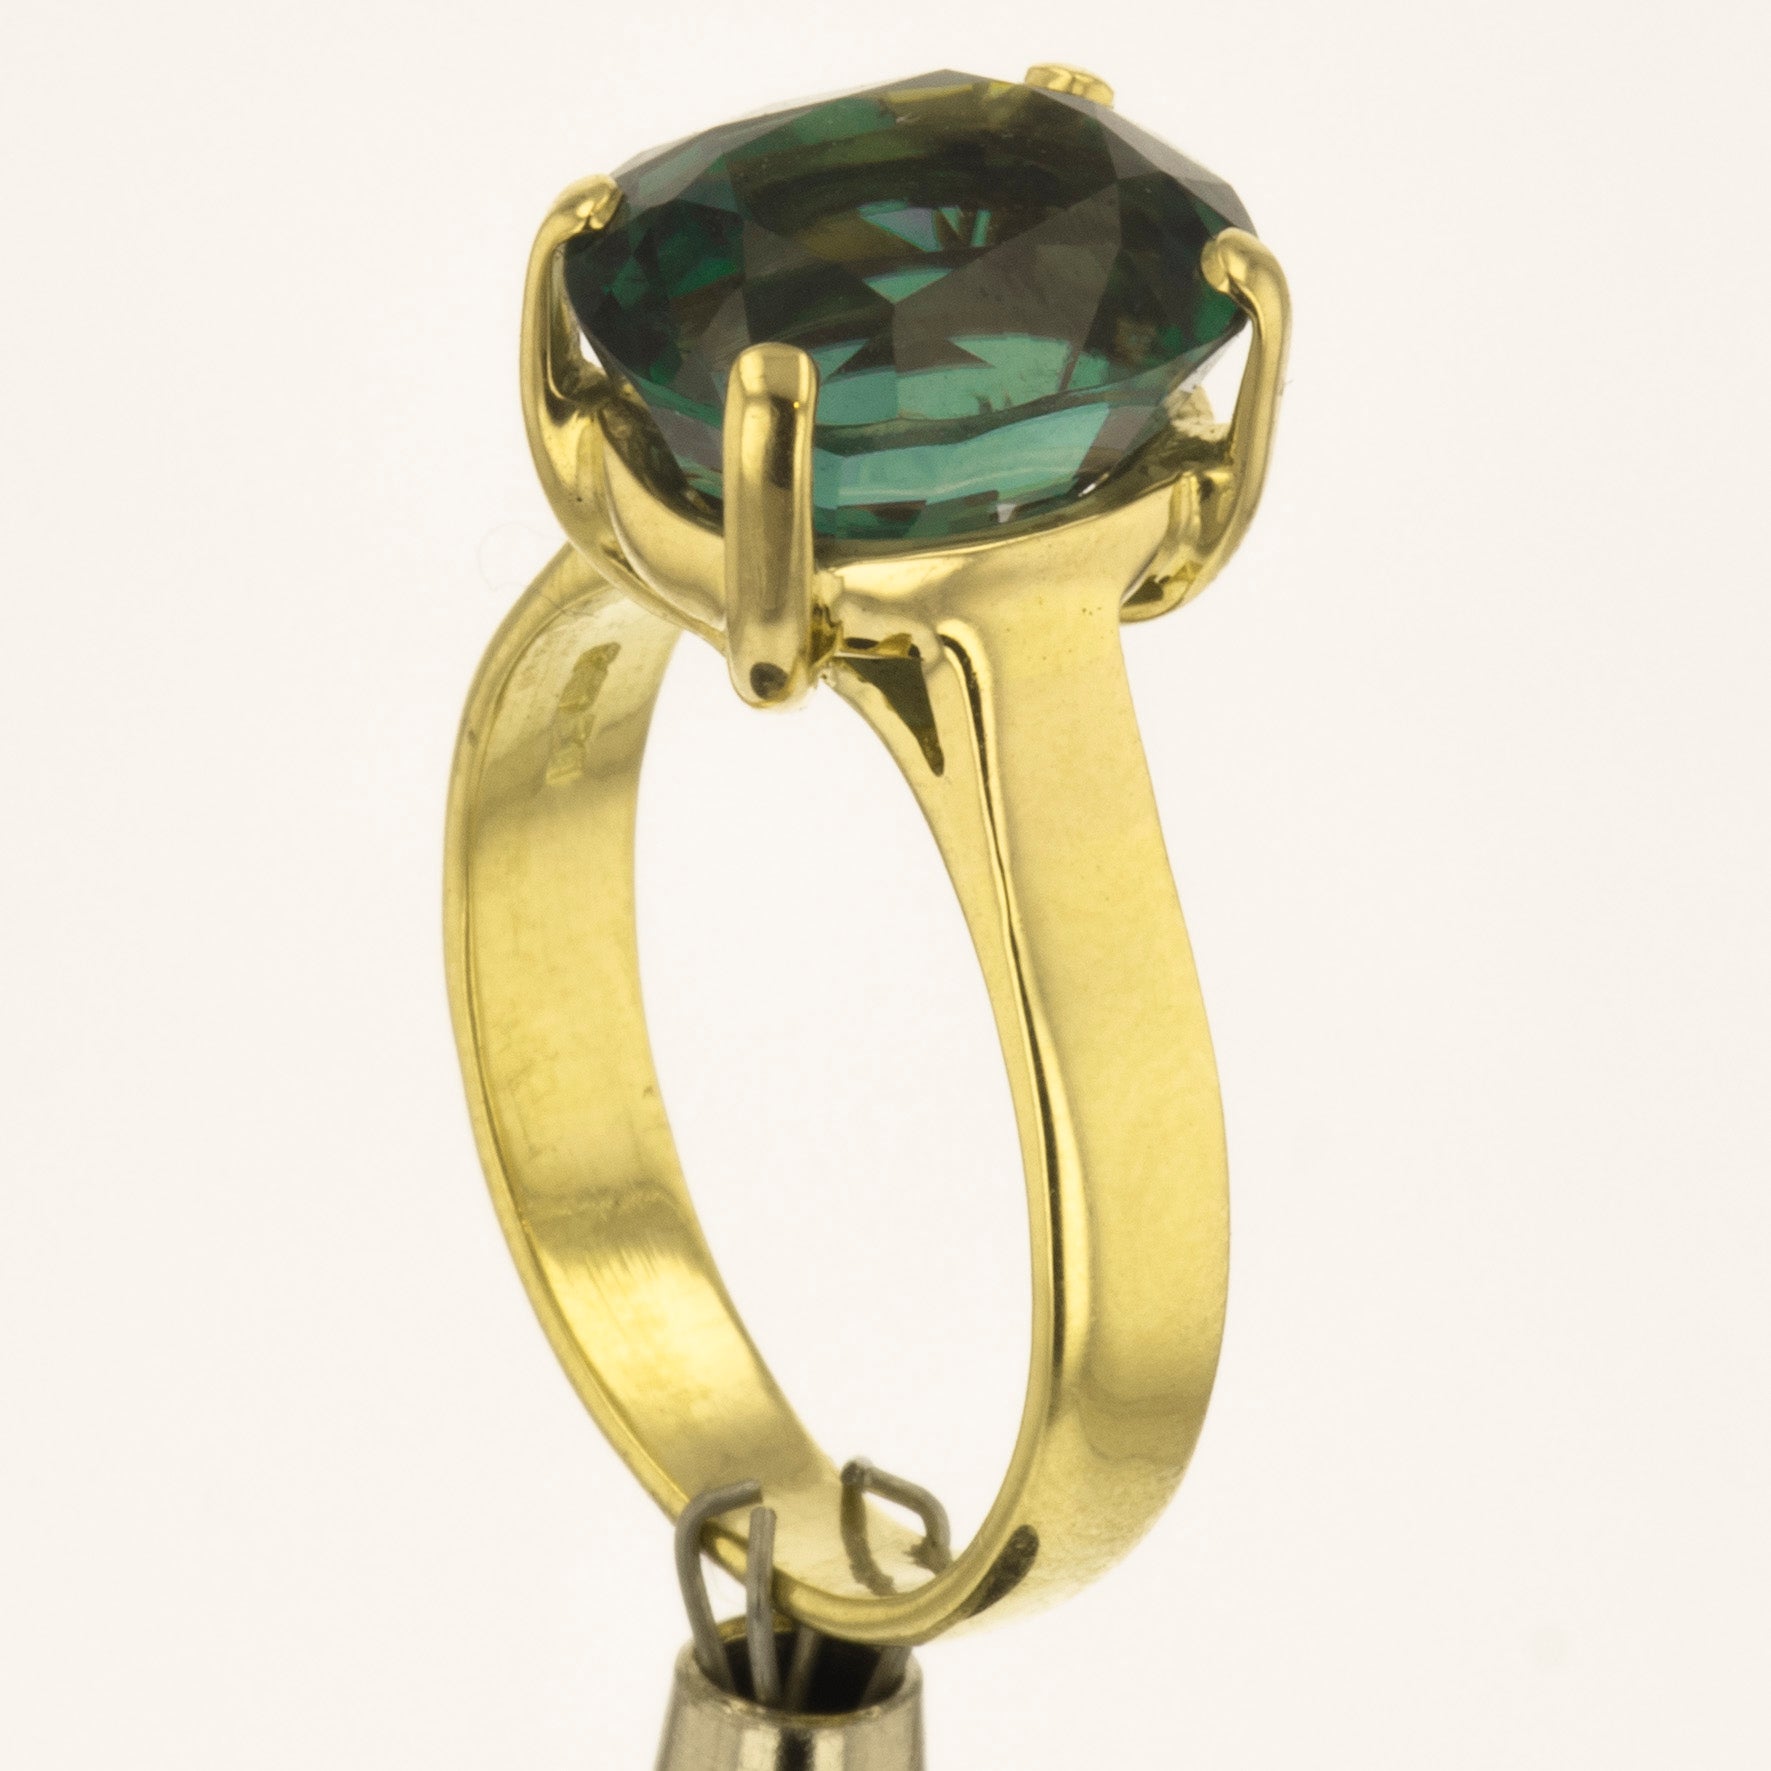 Green tourmaline ring